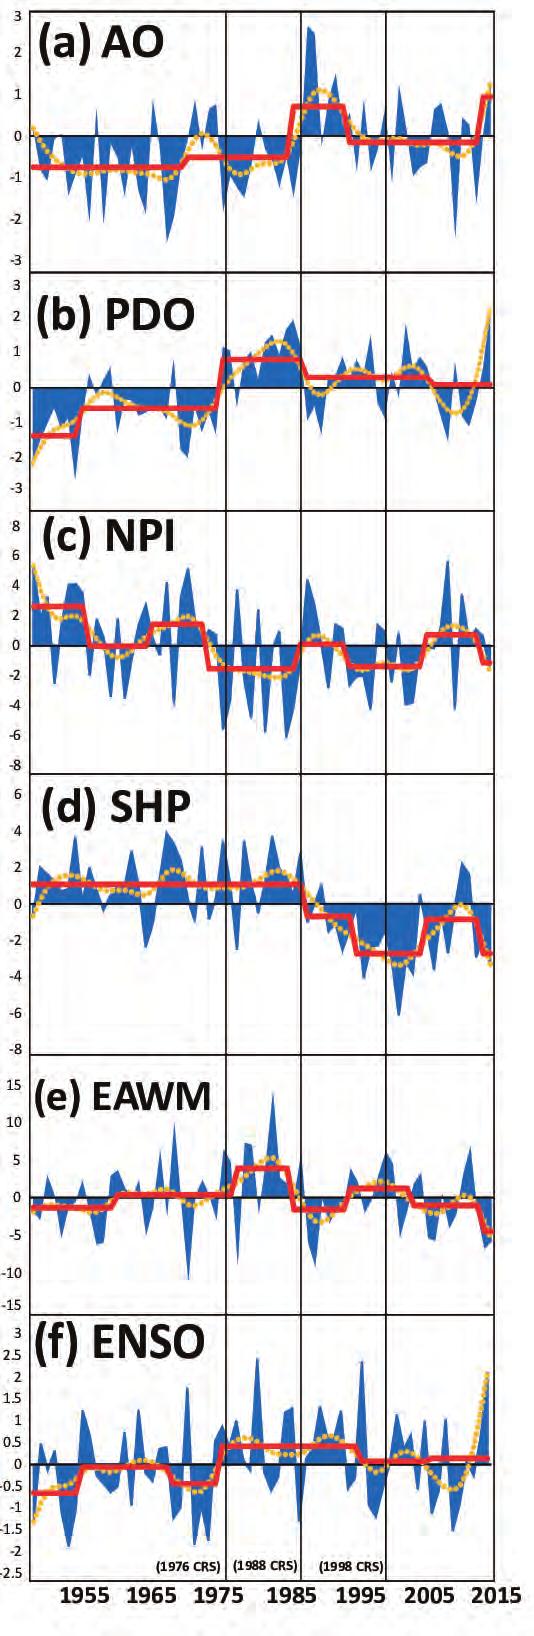 Climate variability & Regime shifts 1976/77 Climate regime shift: 1967:NPI (+) 1970:ENSO (-) 1972:AO (+) 1975:NPI (-), ALP (+) 1977:PDO, ENSO (+) 1979: EAWM (+) 1988/89 Climate regime shift: 1987:AO